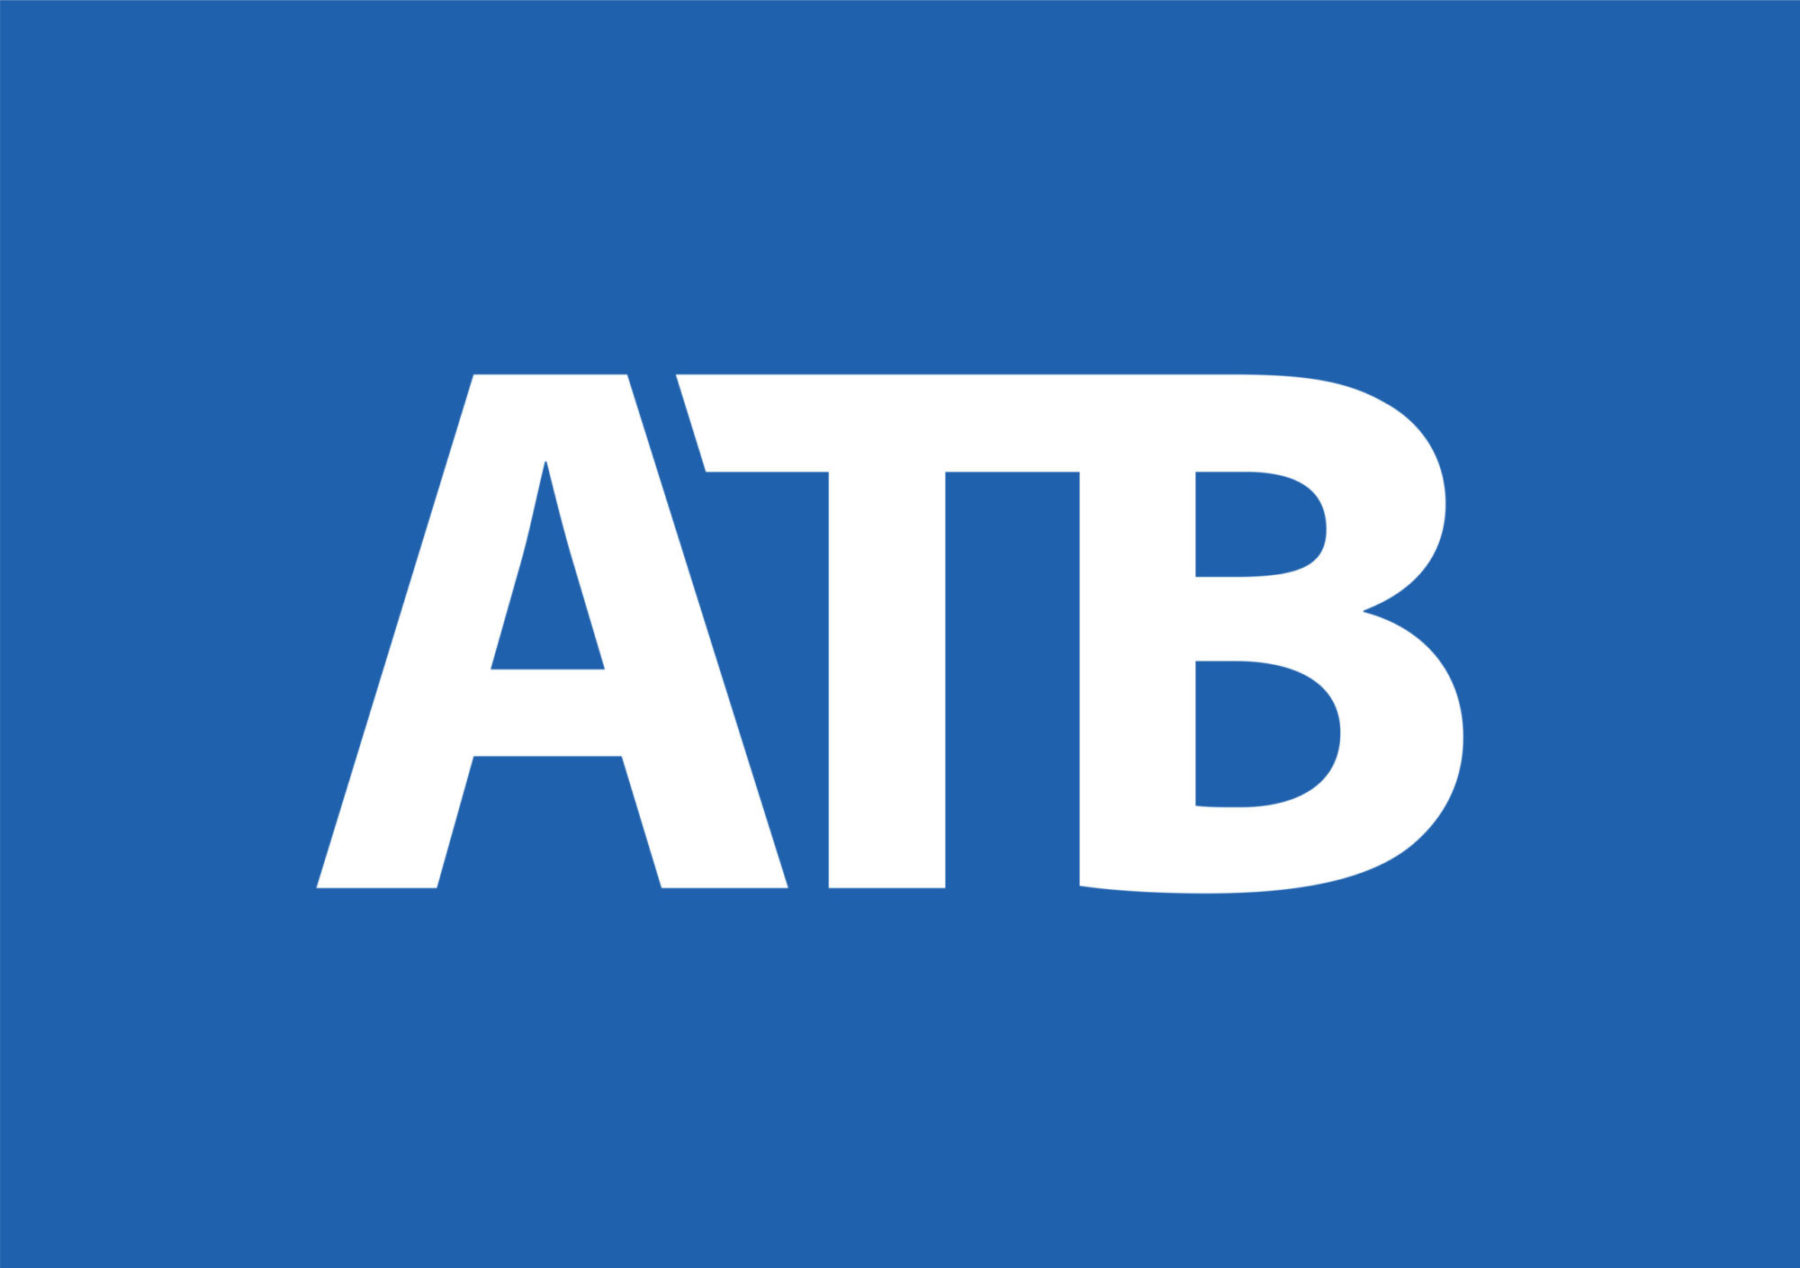 Blue and white ATB logo